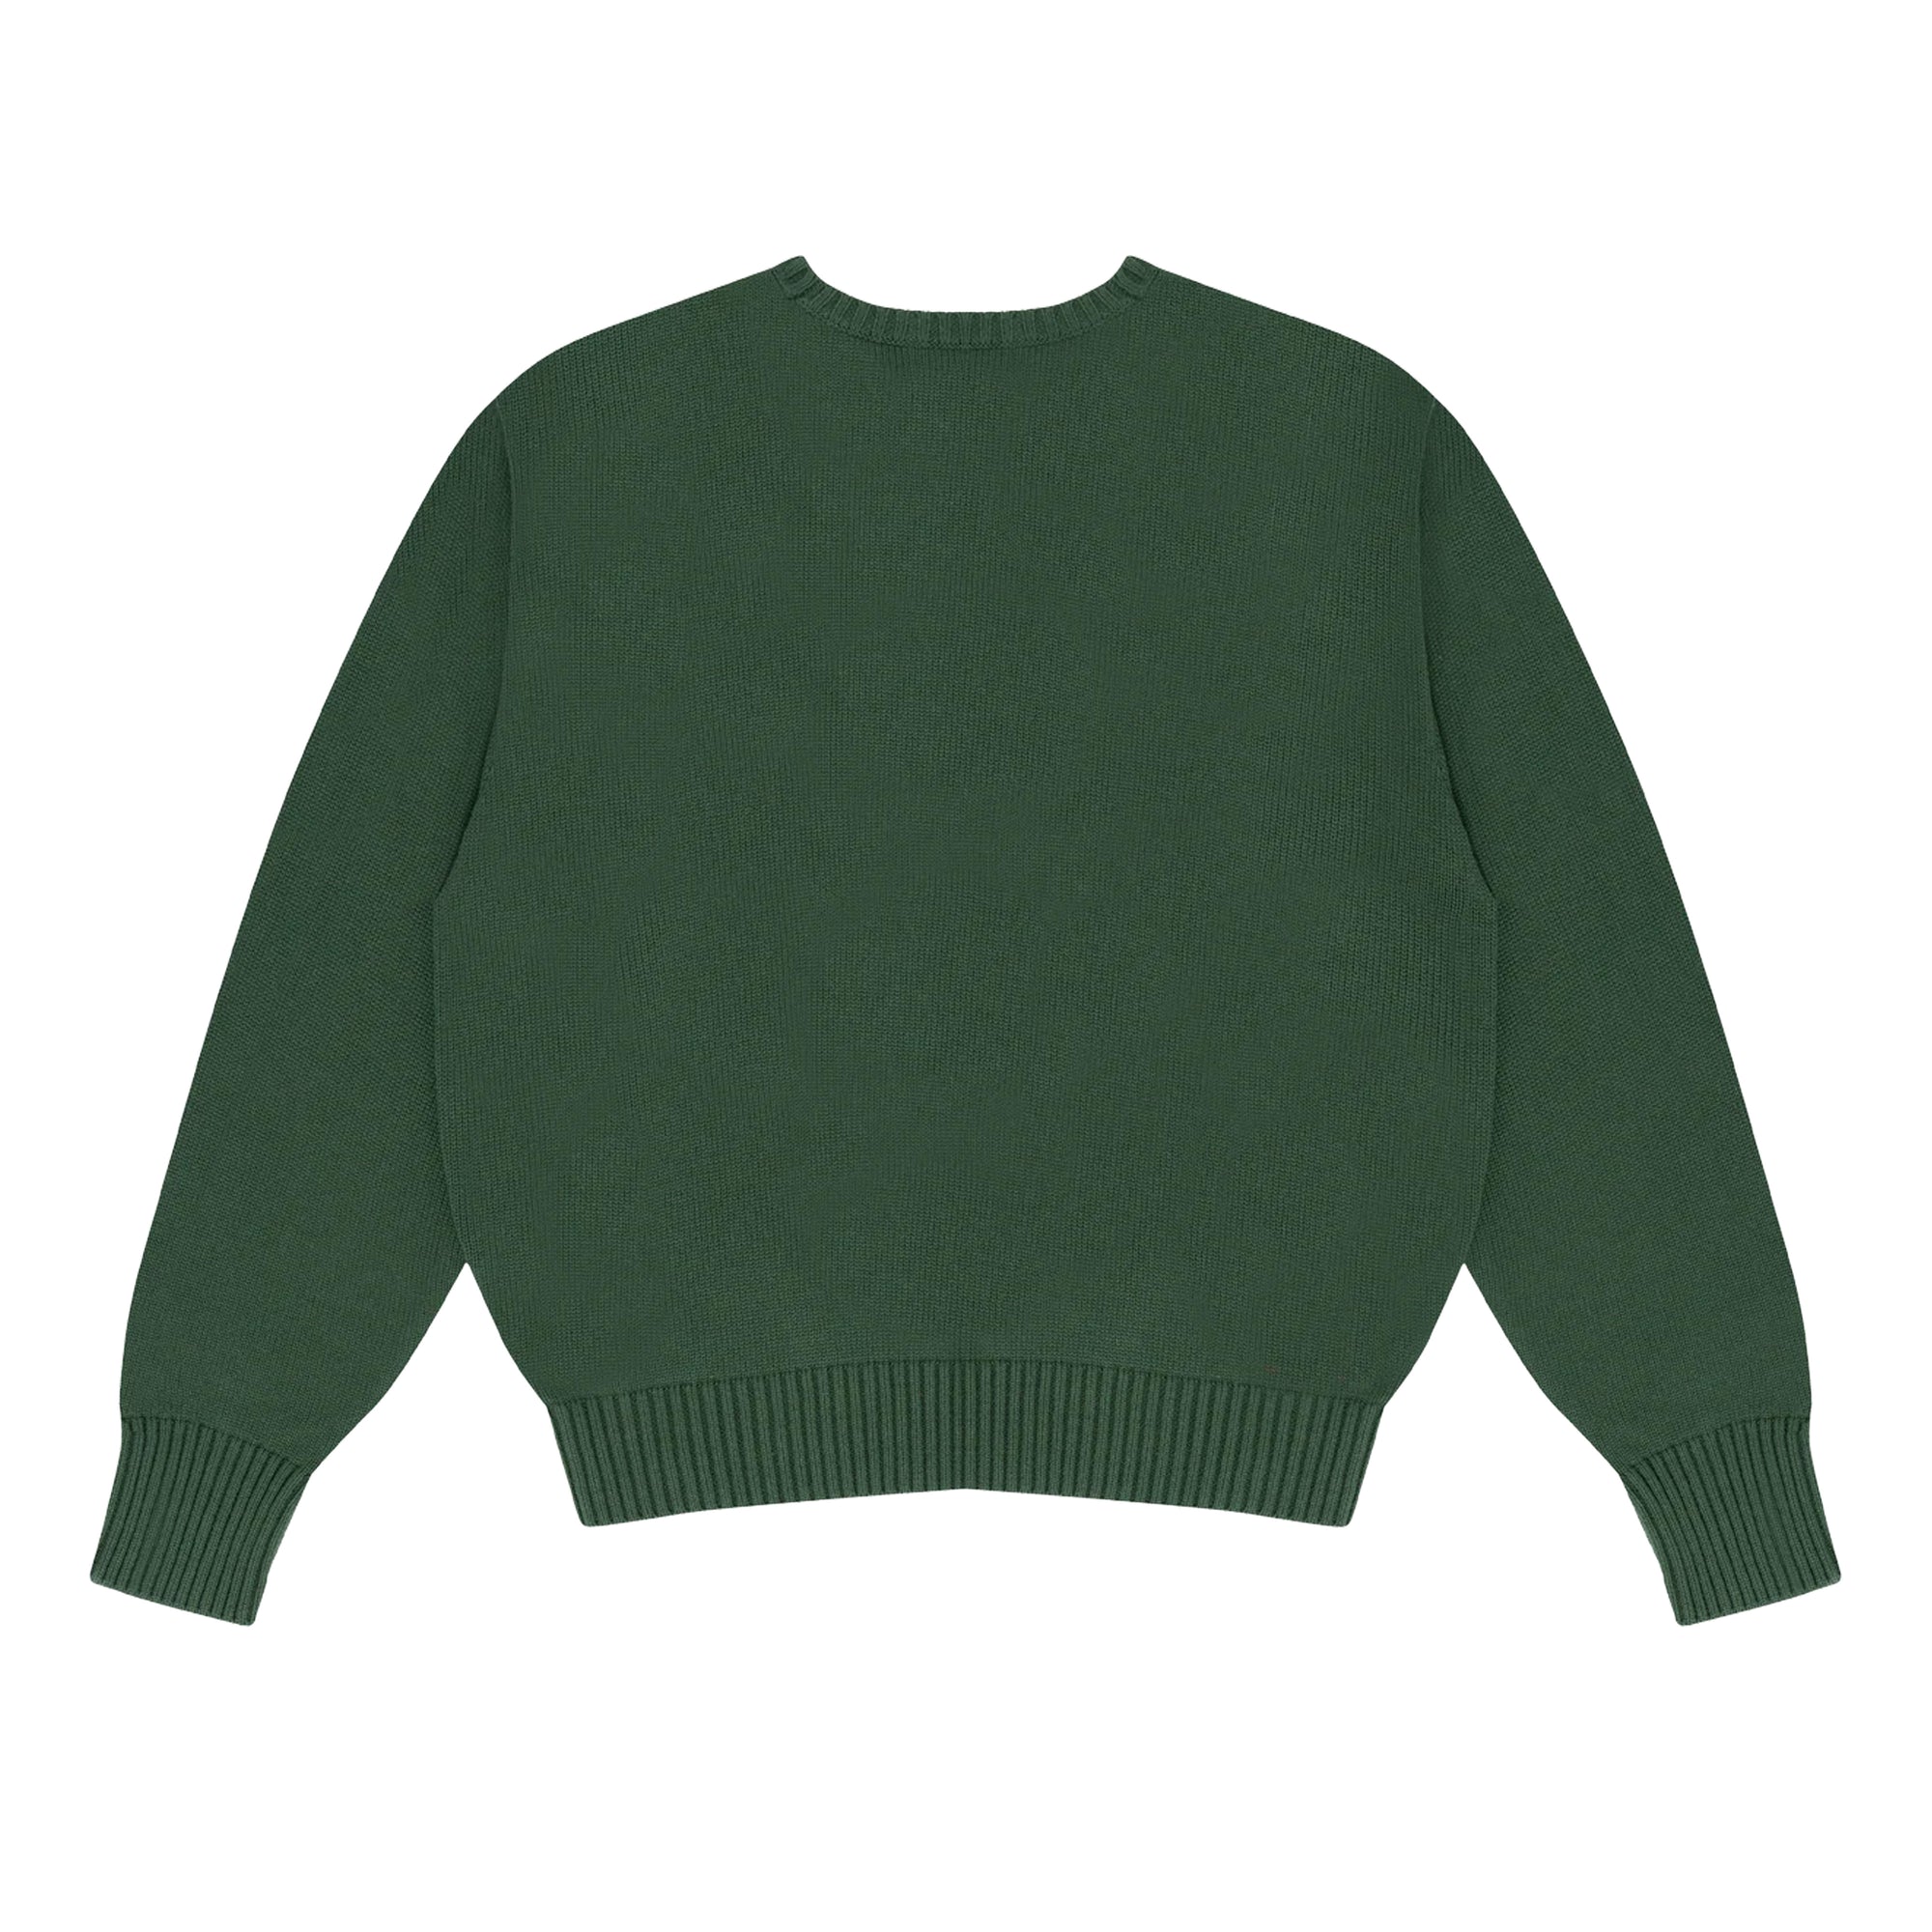 Denim Tears - Tyson Beckford Sweater - (Green) view 2